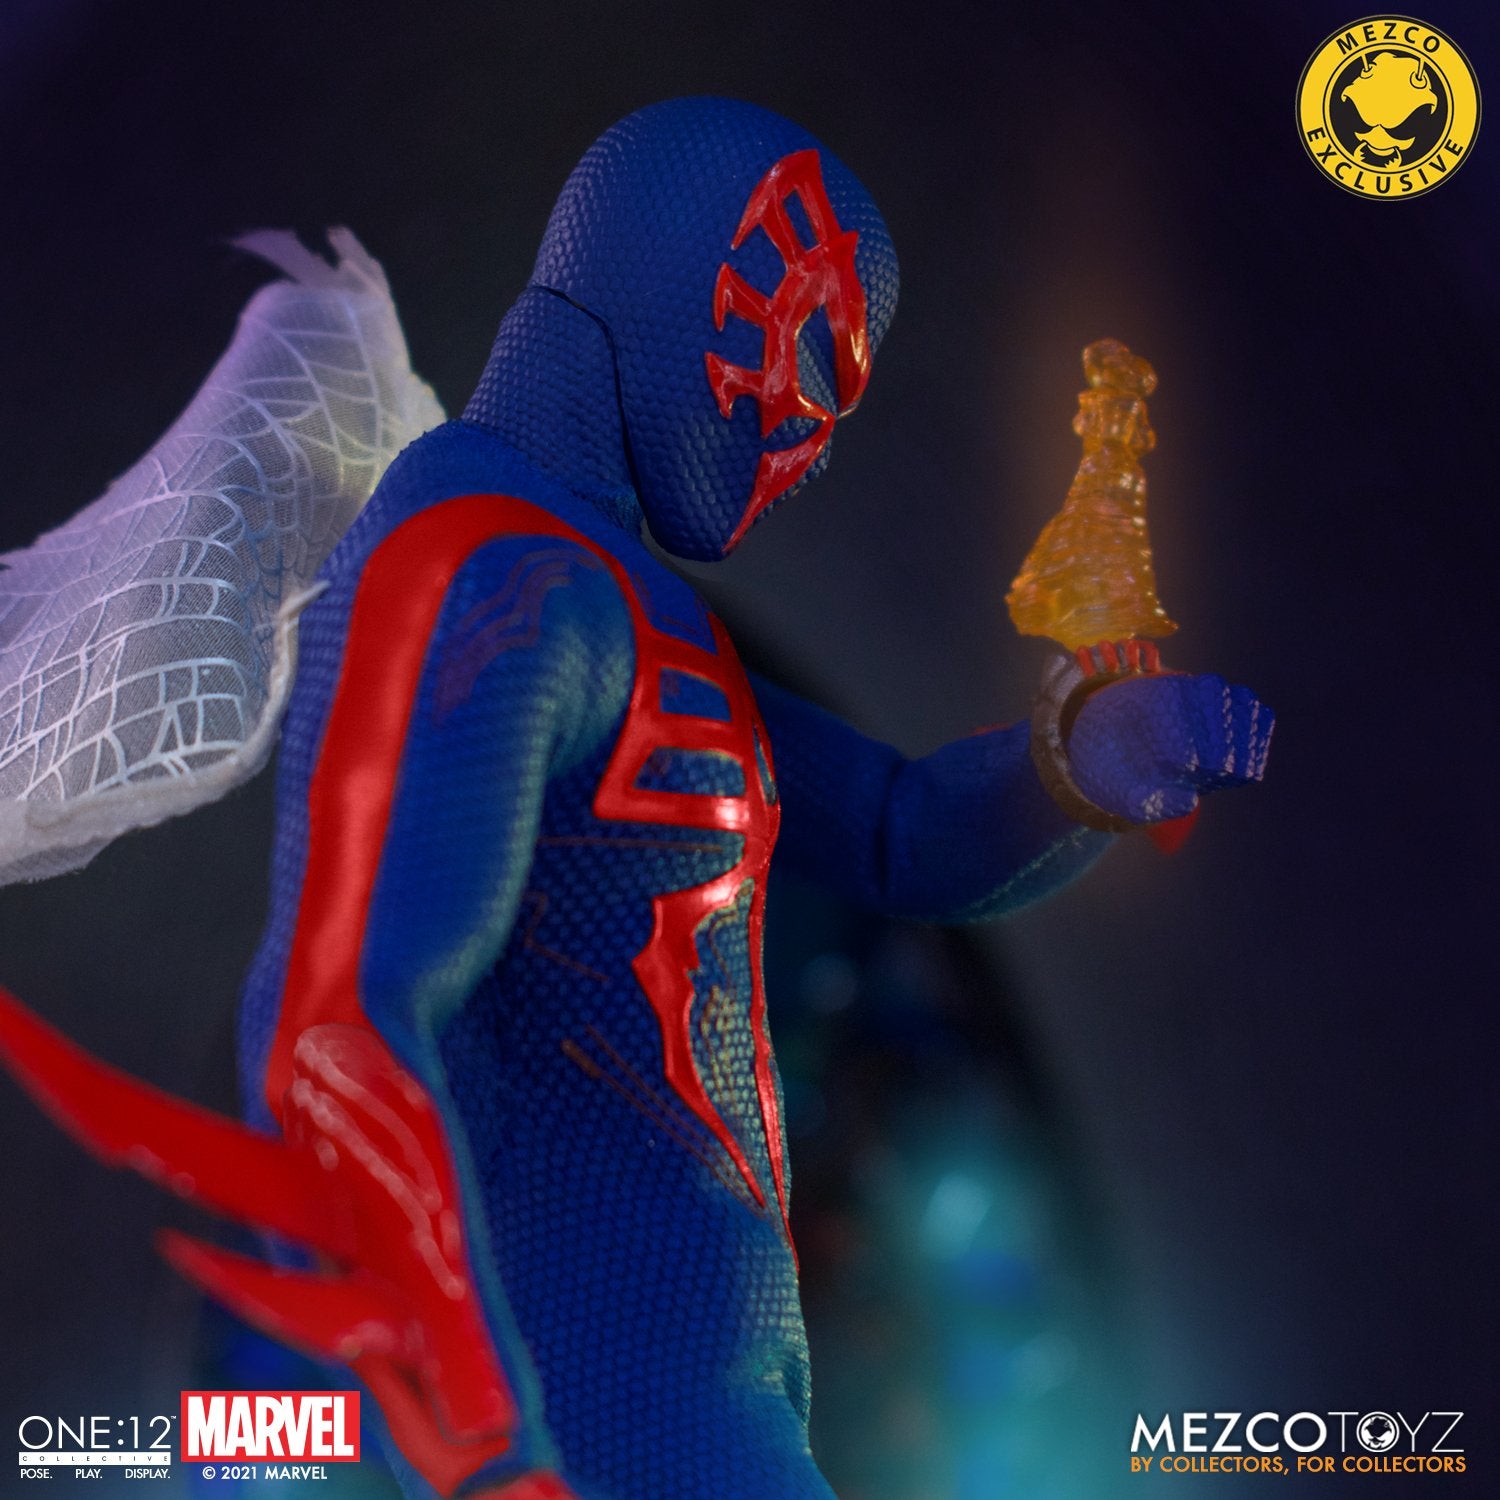 Mezco Toyz One:12 Collective Spider-Man 2099 Figure